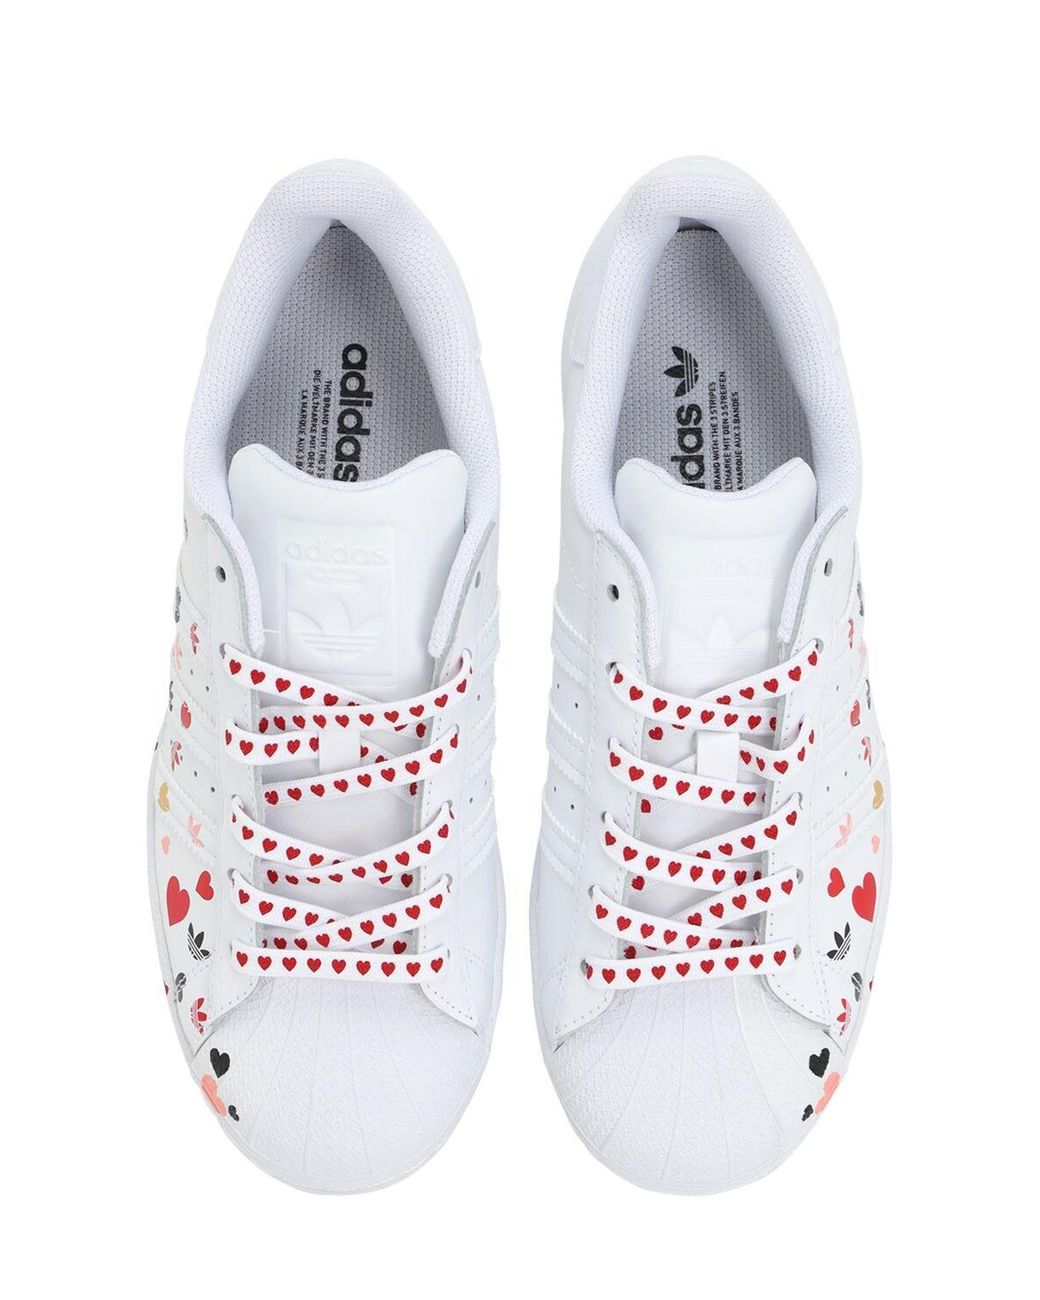 Simplicity Conjugate appease adidas Originals – Superstar – e Sneaker mit Herz-Muster in Weiß | Lyst DE